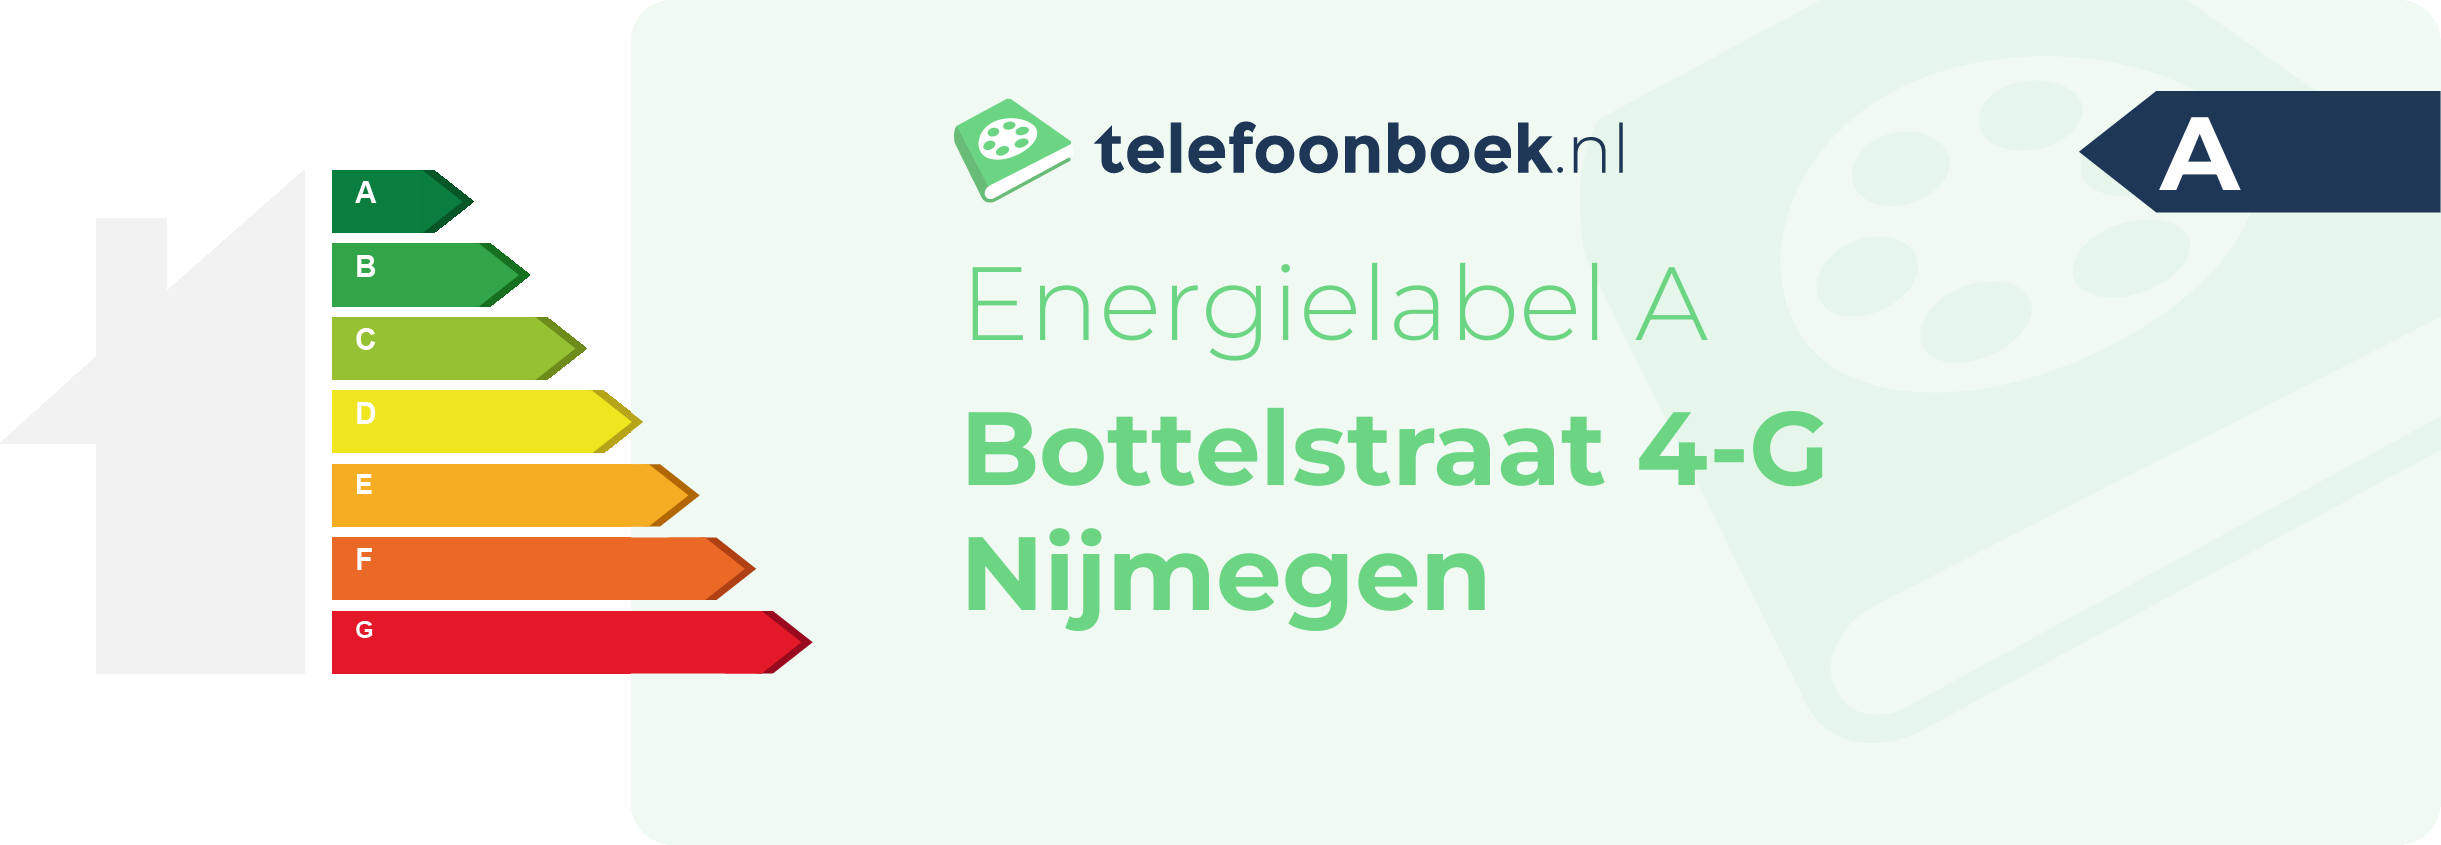 Energielabel Bottelstraat 4-G Nijmegen